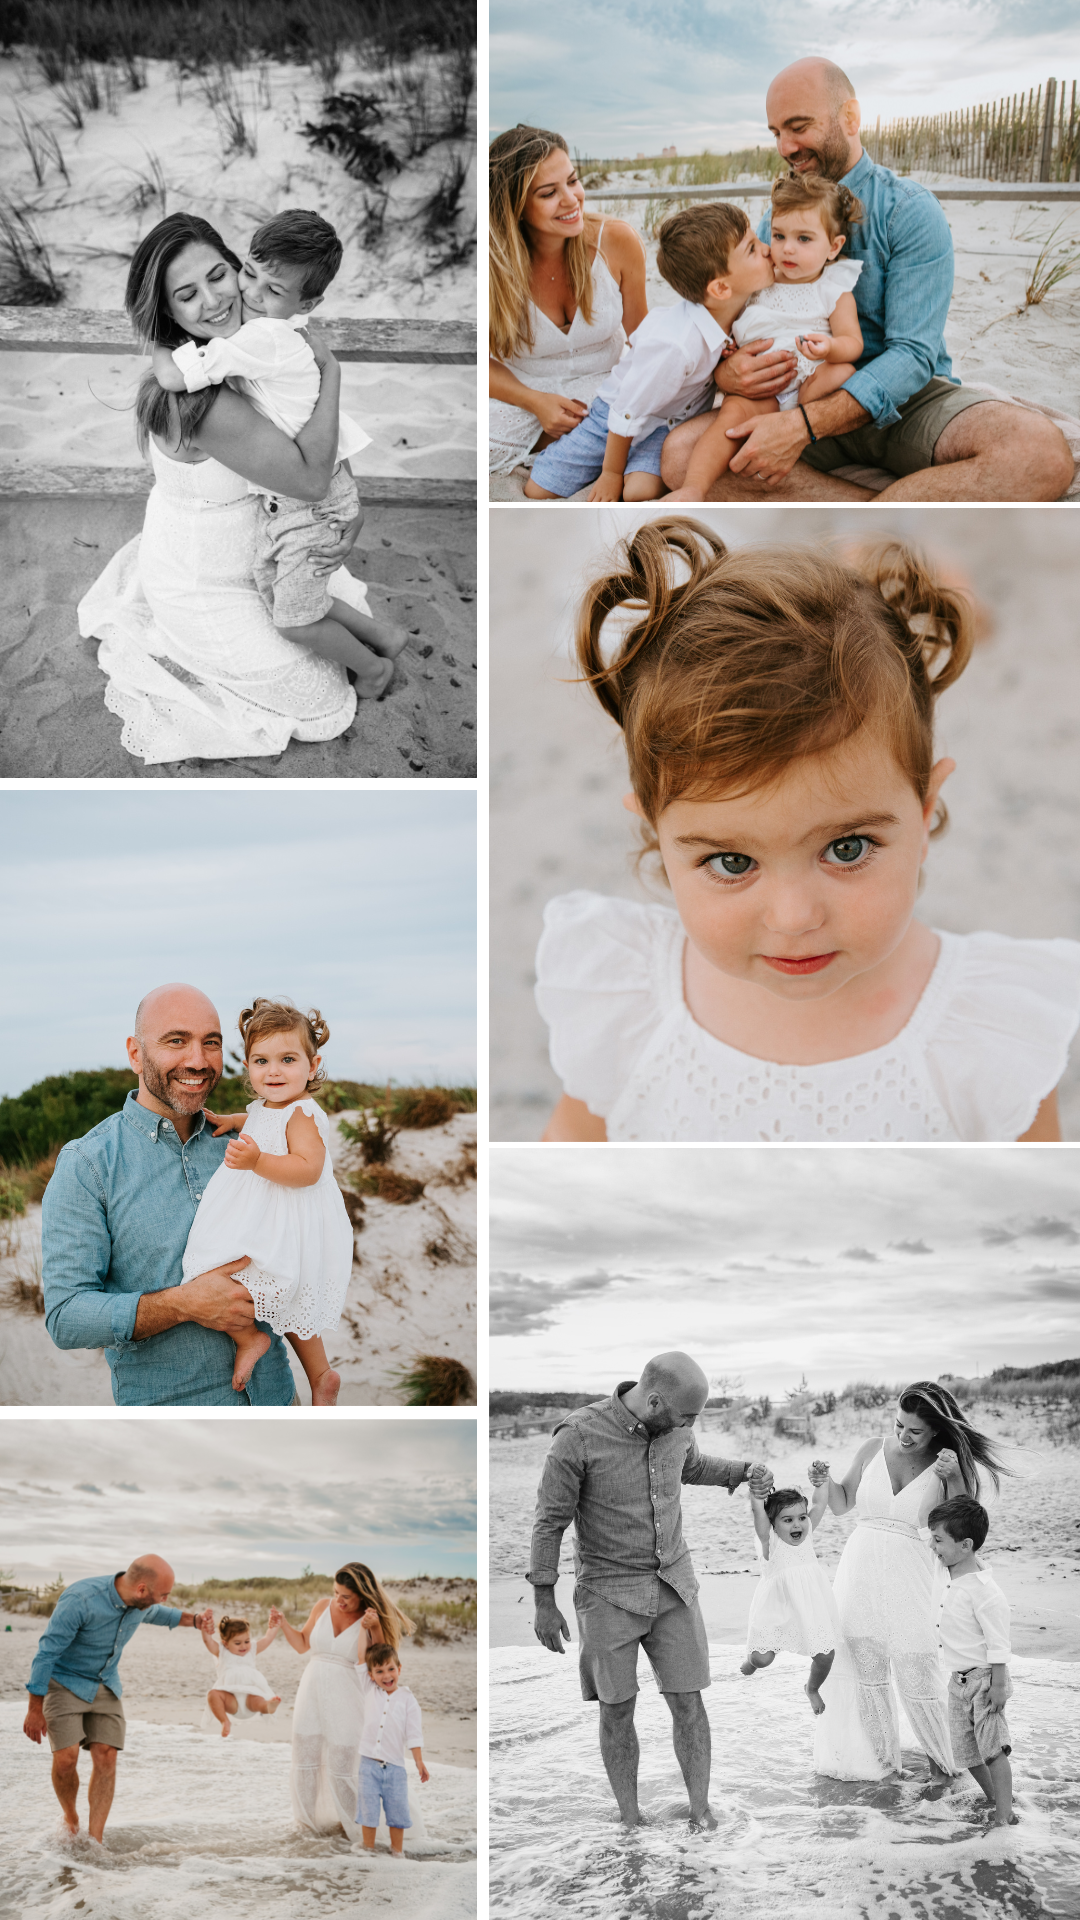 Lifestyle Beach Family Photoshoot collage taken on long island, ny